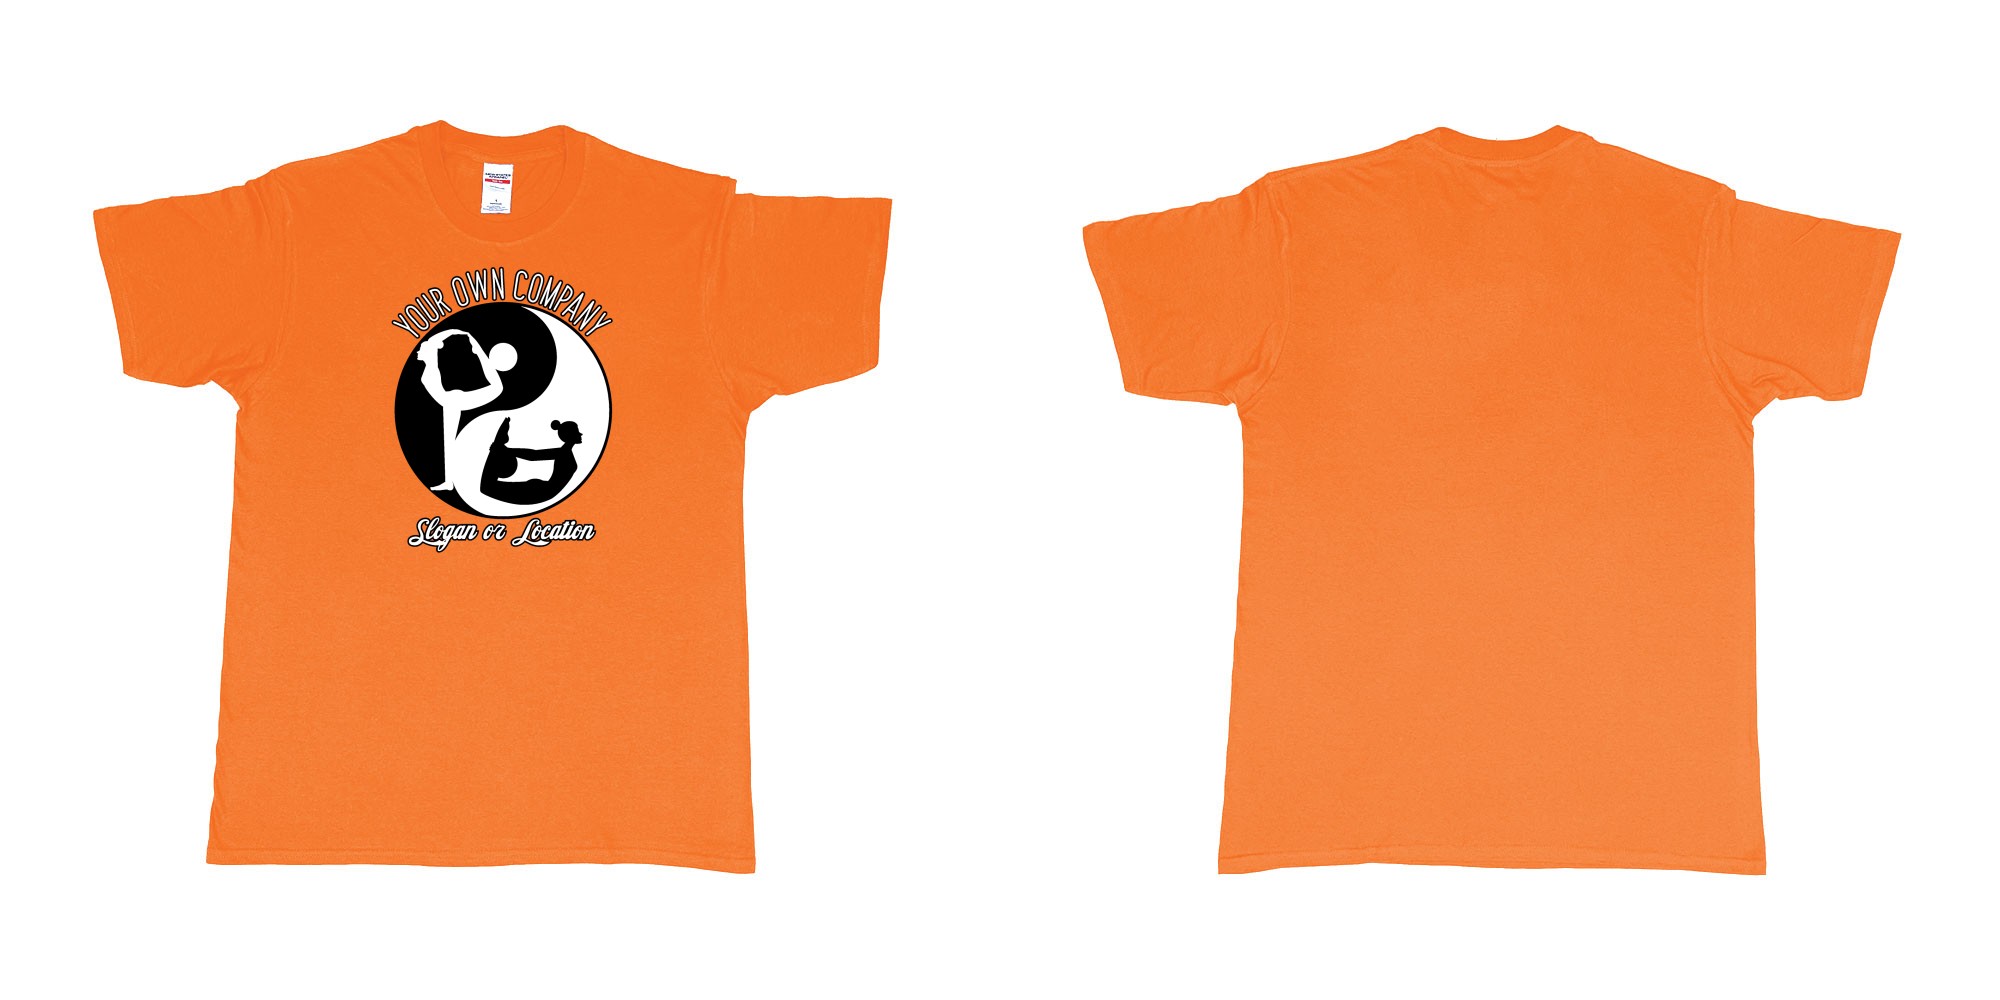 Custom tshirt design yin yang yoga balance custom studio t shirt in fabric color orange choice your own text made in Bali by The Pirate Way